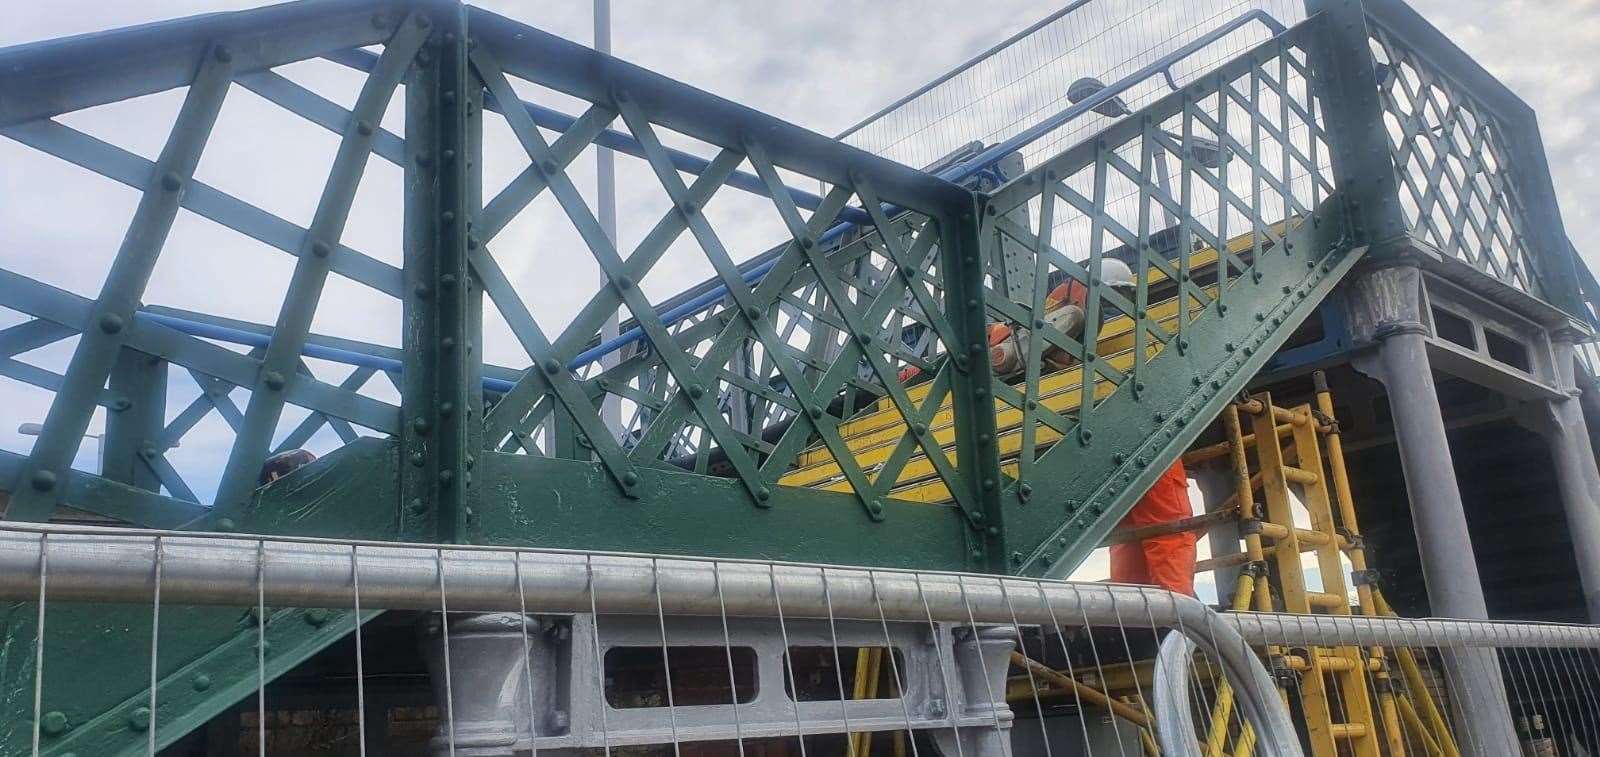 The refurbished foot bridge at Snodand Station